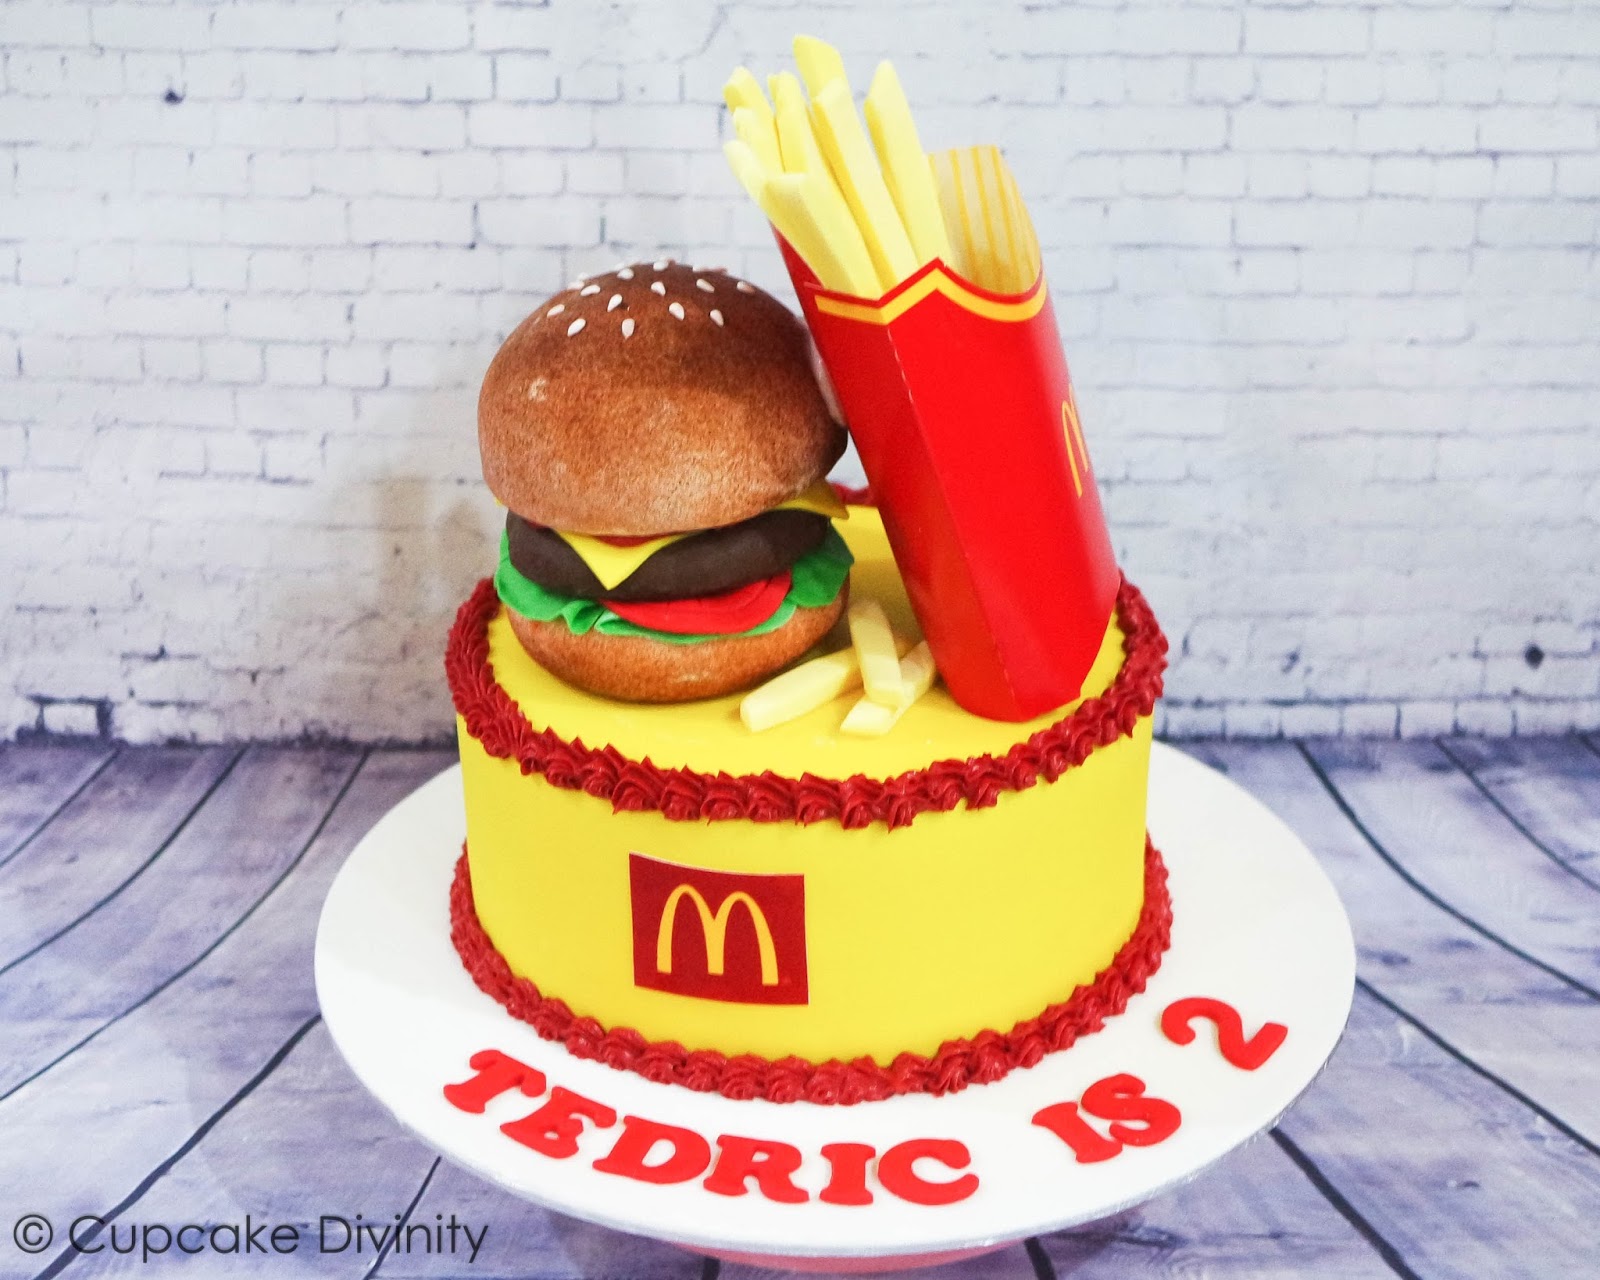 French Fries Birthday Cake Design - French Fries Birthday Cake Design Uniqu...